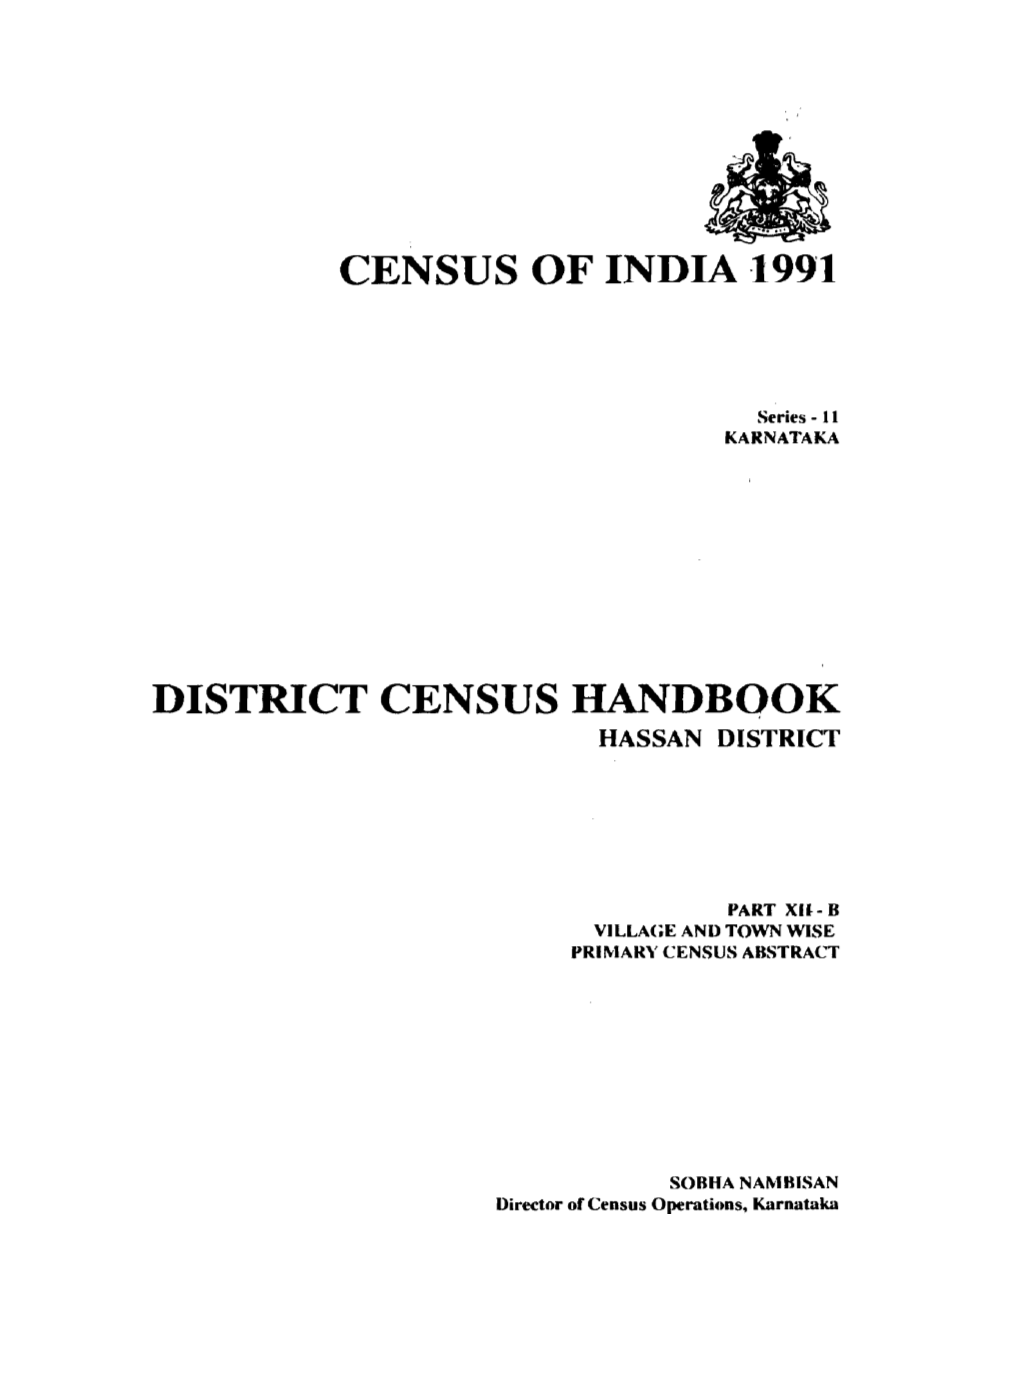 District Census Handbook, Hassan, Part XII-B, Series-11